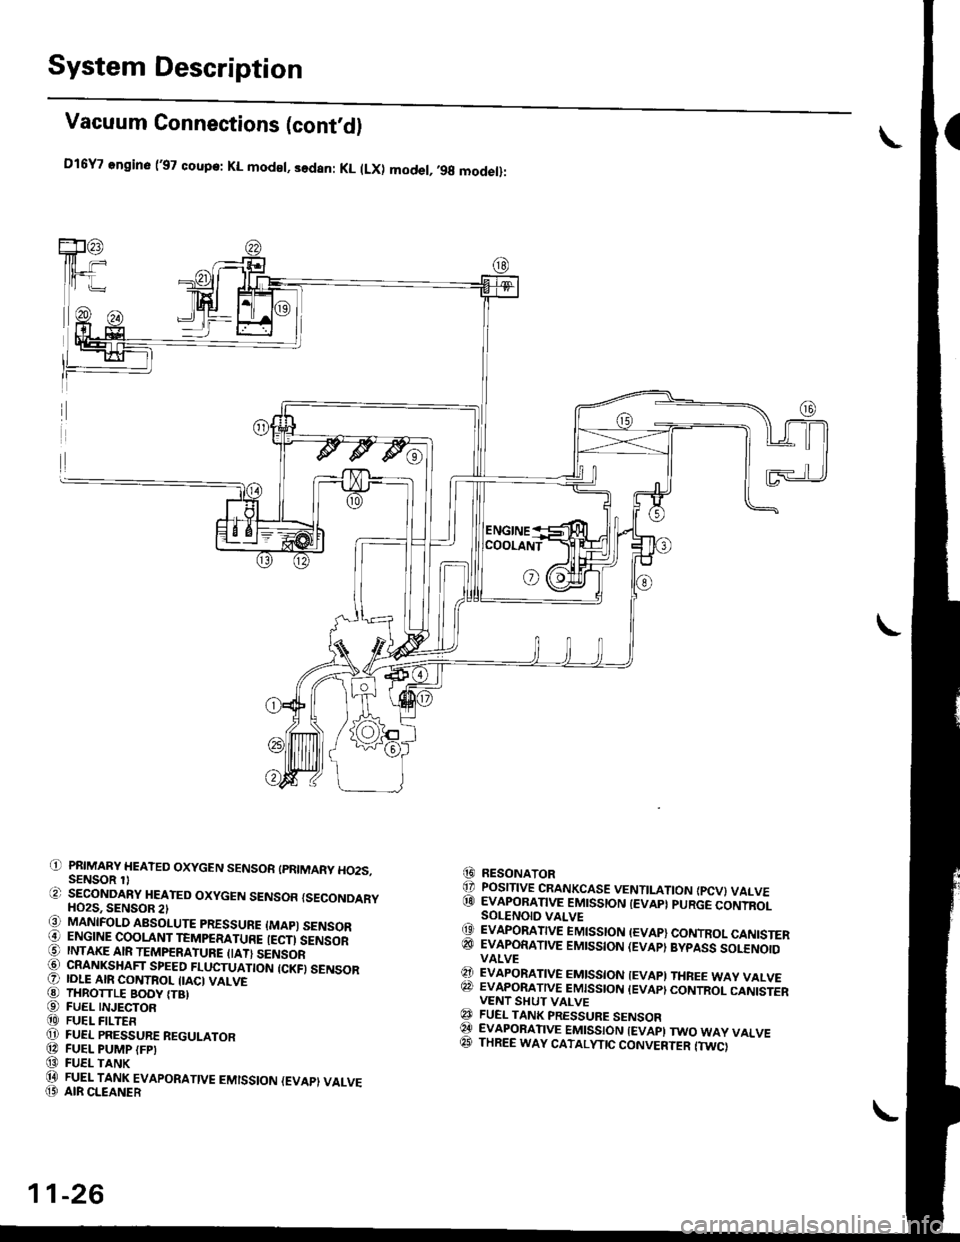 HONDA CIVIC 1999 6.G Repair Manual System Description
Vacuum Connections (contd)
Dl6Y7 angin6 (97 coup.: KL mod€l, sedan: KL (LX) model,,9g modet):
i1] PRIMARY HEATED OXYGEN SENSOR (PRIMARY HO2S,SENSOR 1)E) SECONDARY HEATED OXYGEN 